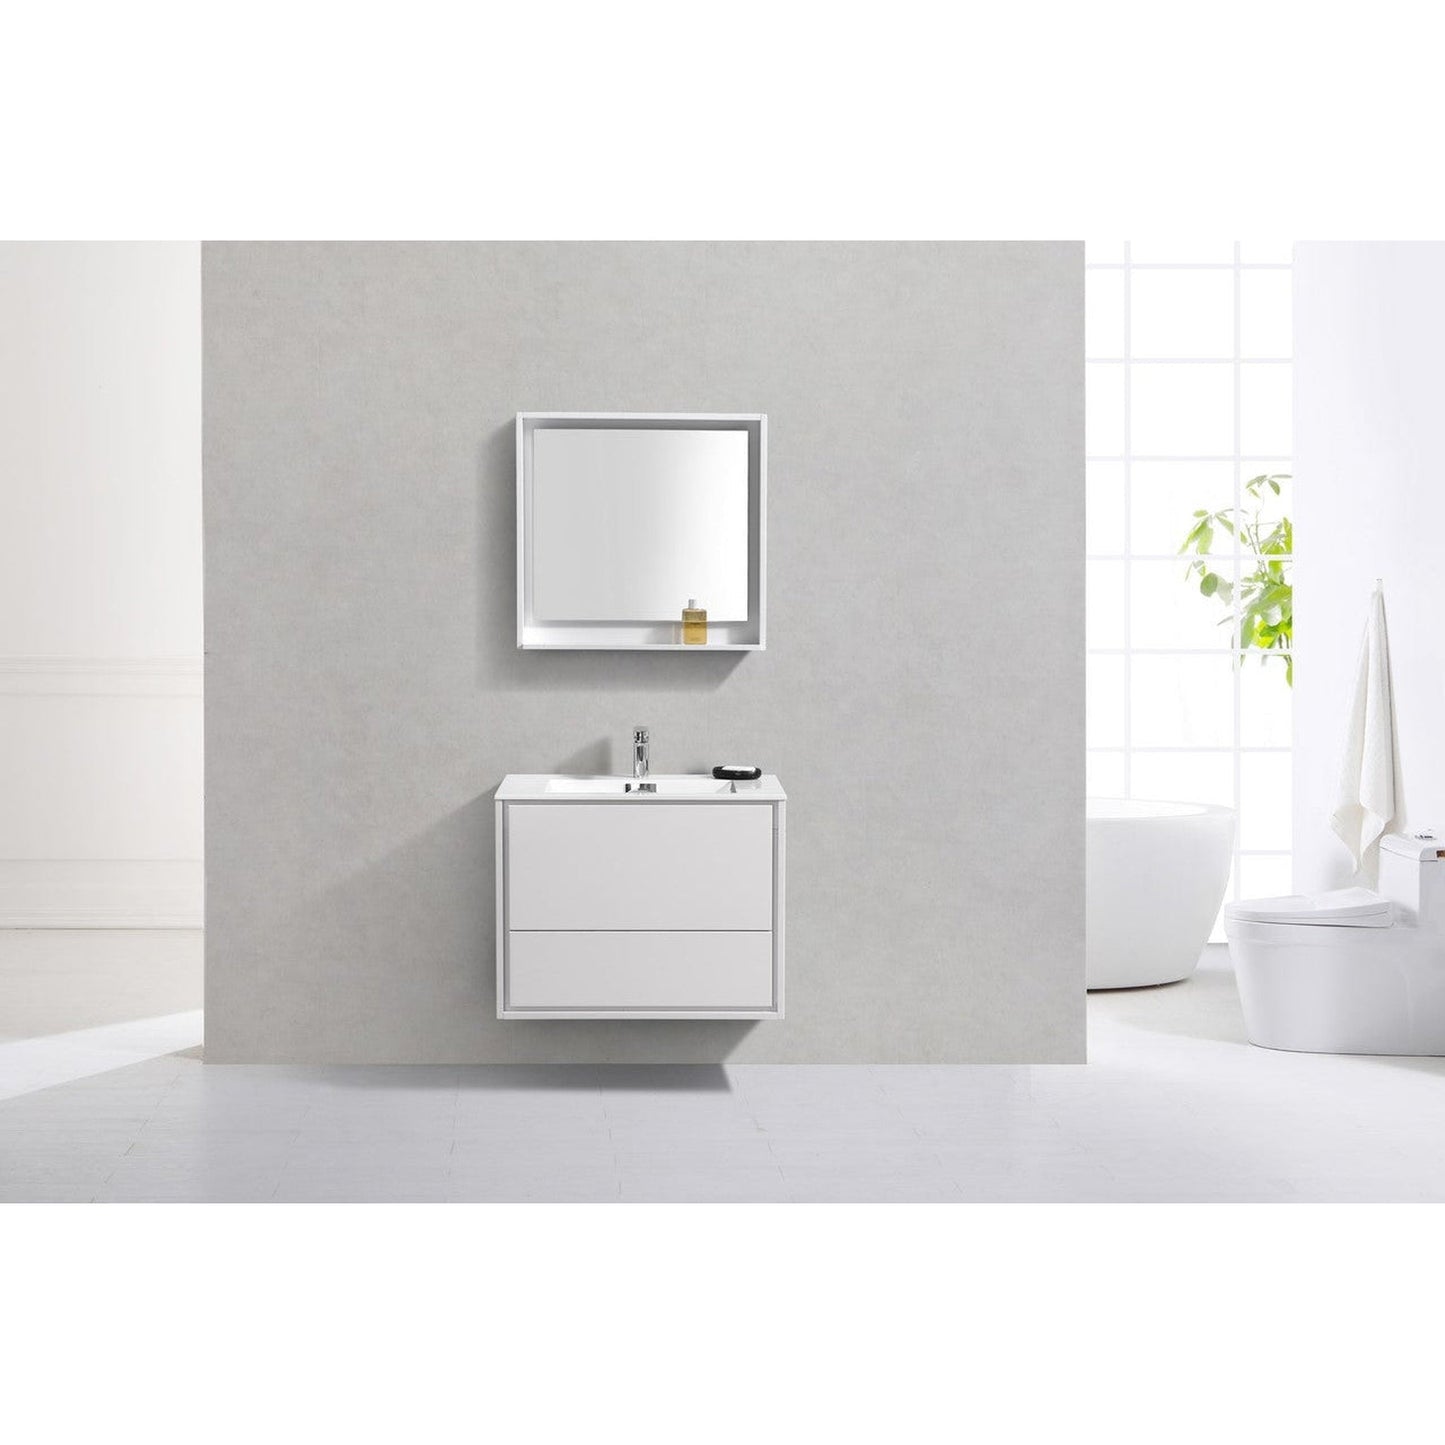 KubeBath DeLusso 30" High Gloss White Wall-Mounted Modern Bathroom Vanity With Single Integrated Acrylic Sink With Overflow